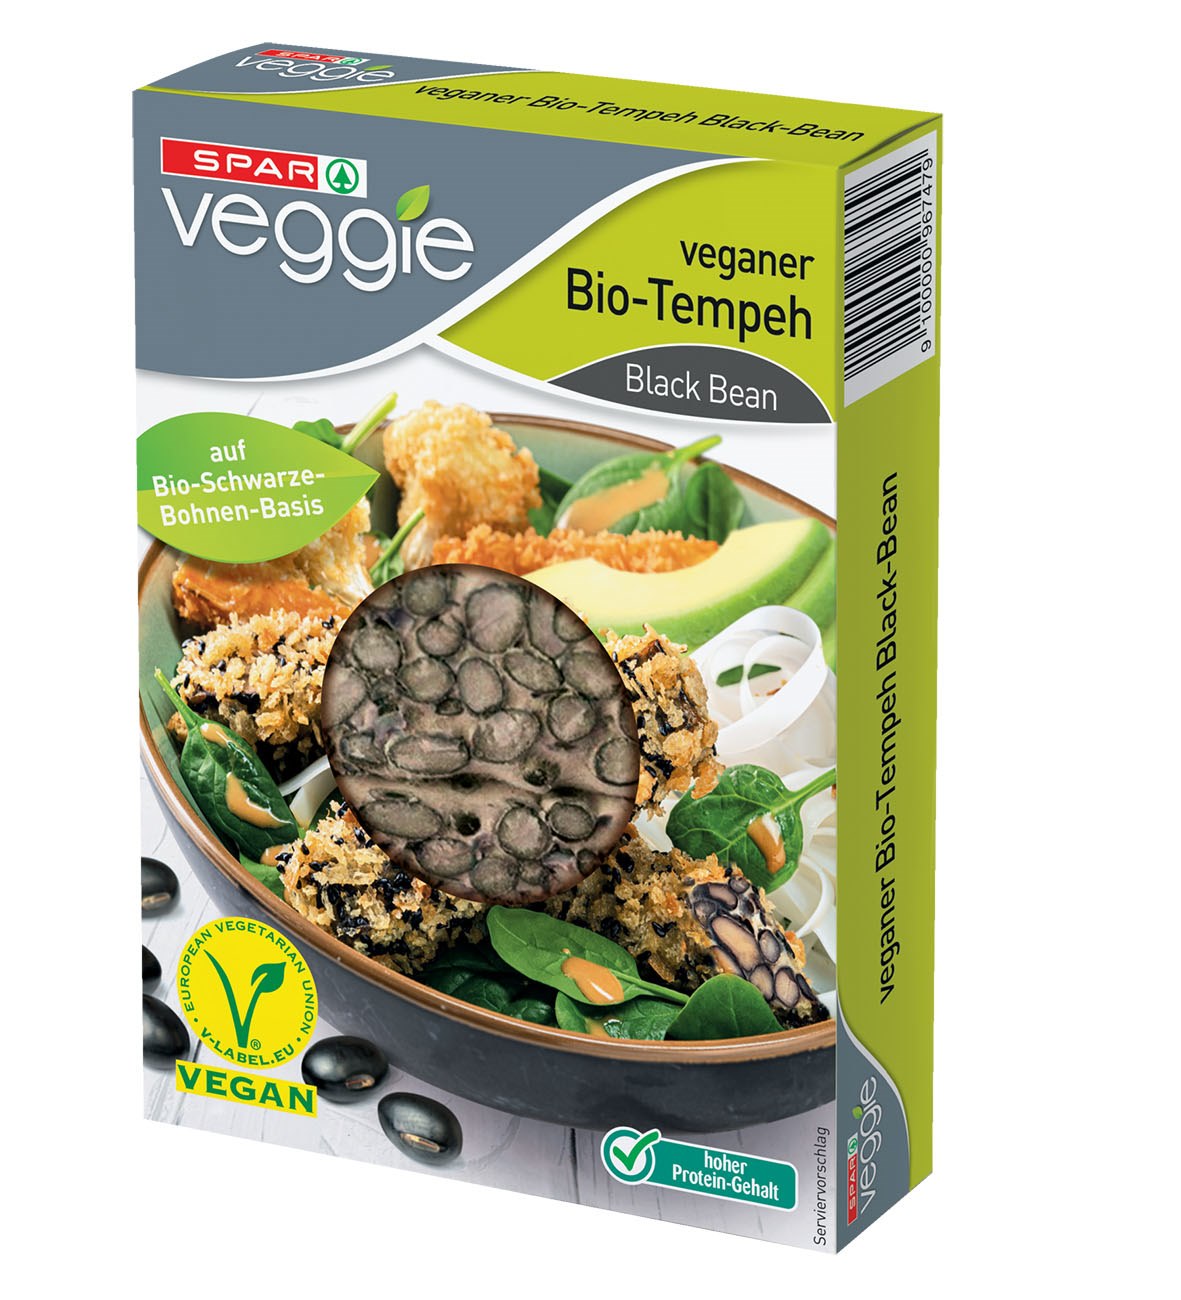 SPAR Veggie veganer Bio-Tempeh Black Bean